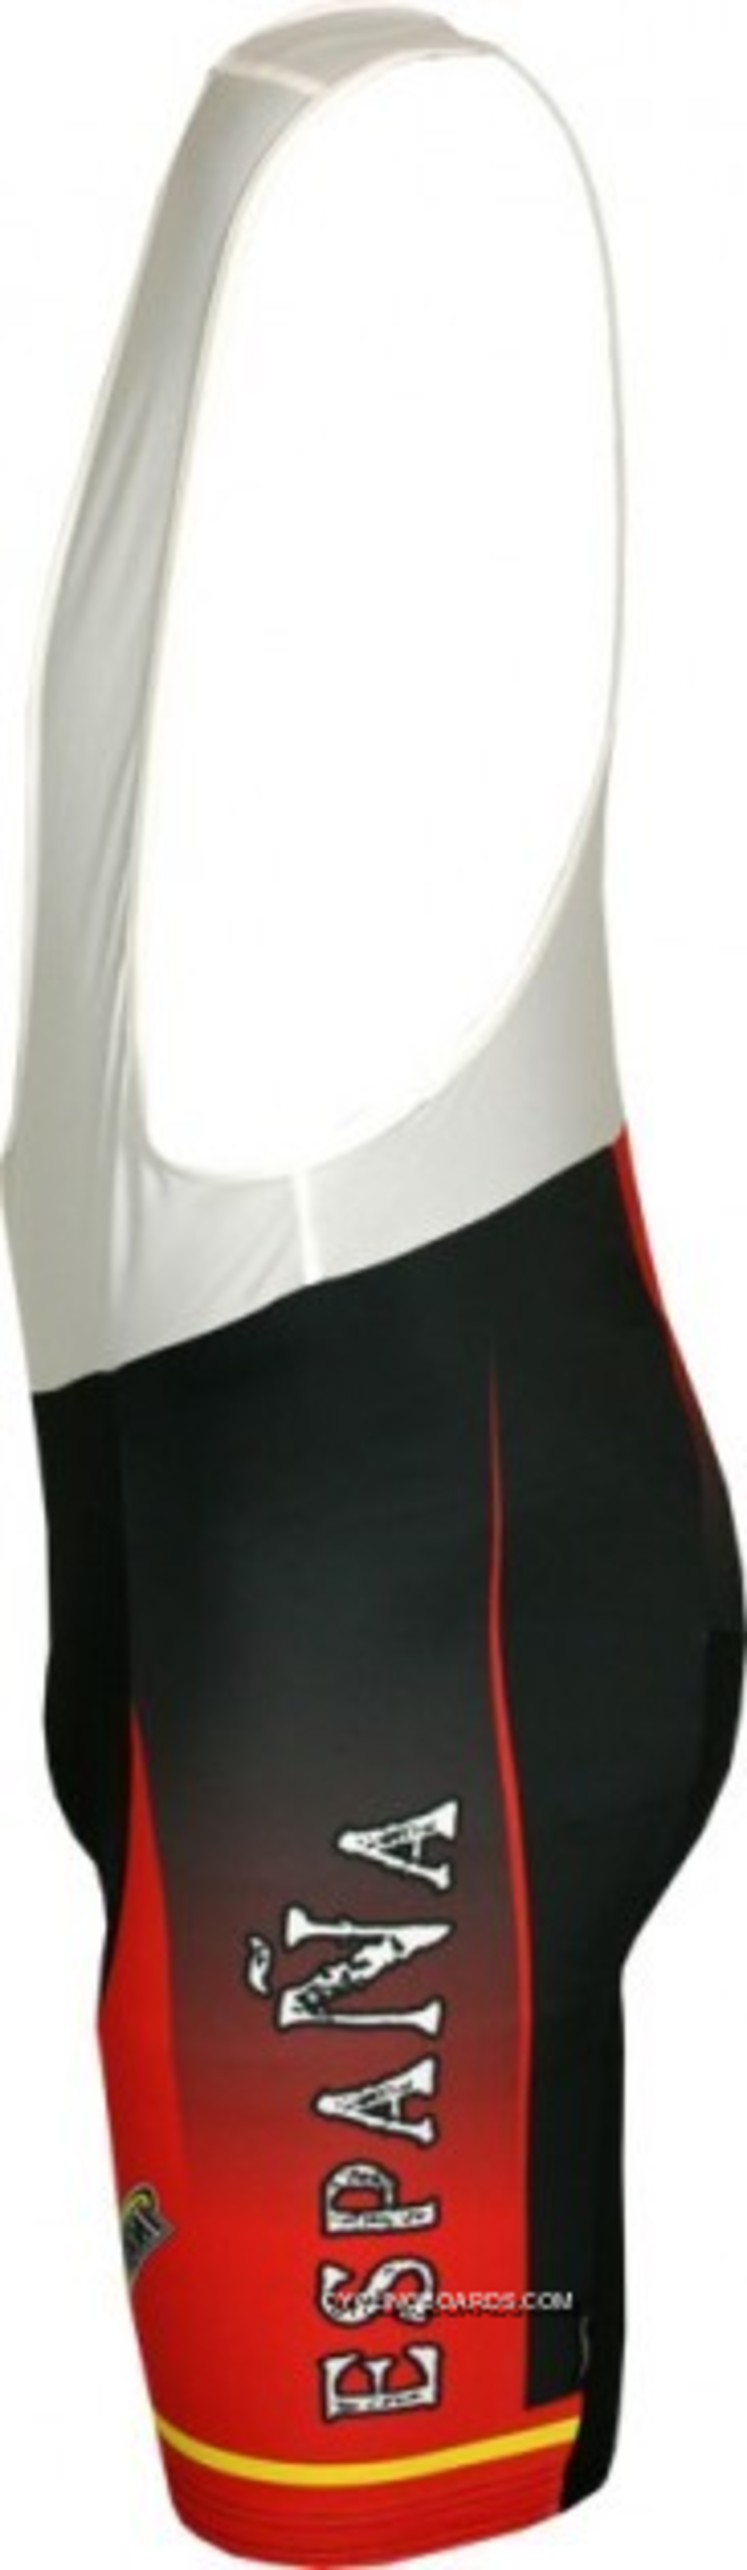 España 2011 Inverse Radsport-Profi-Team Bib Shorts White Tj-002-2069 New Release